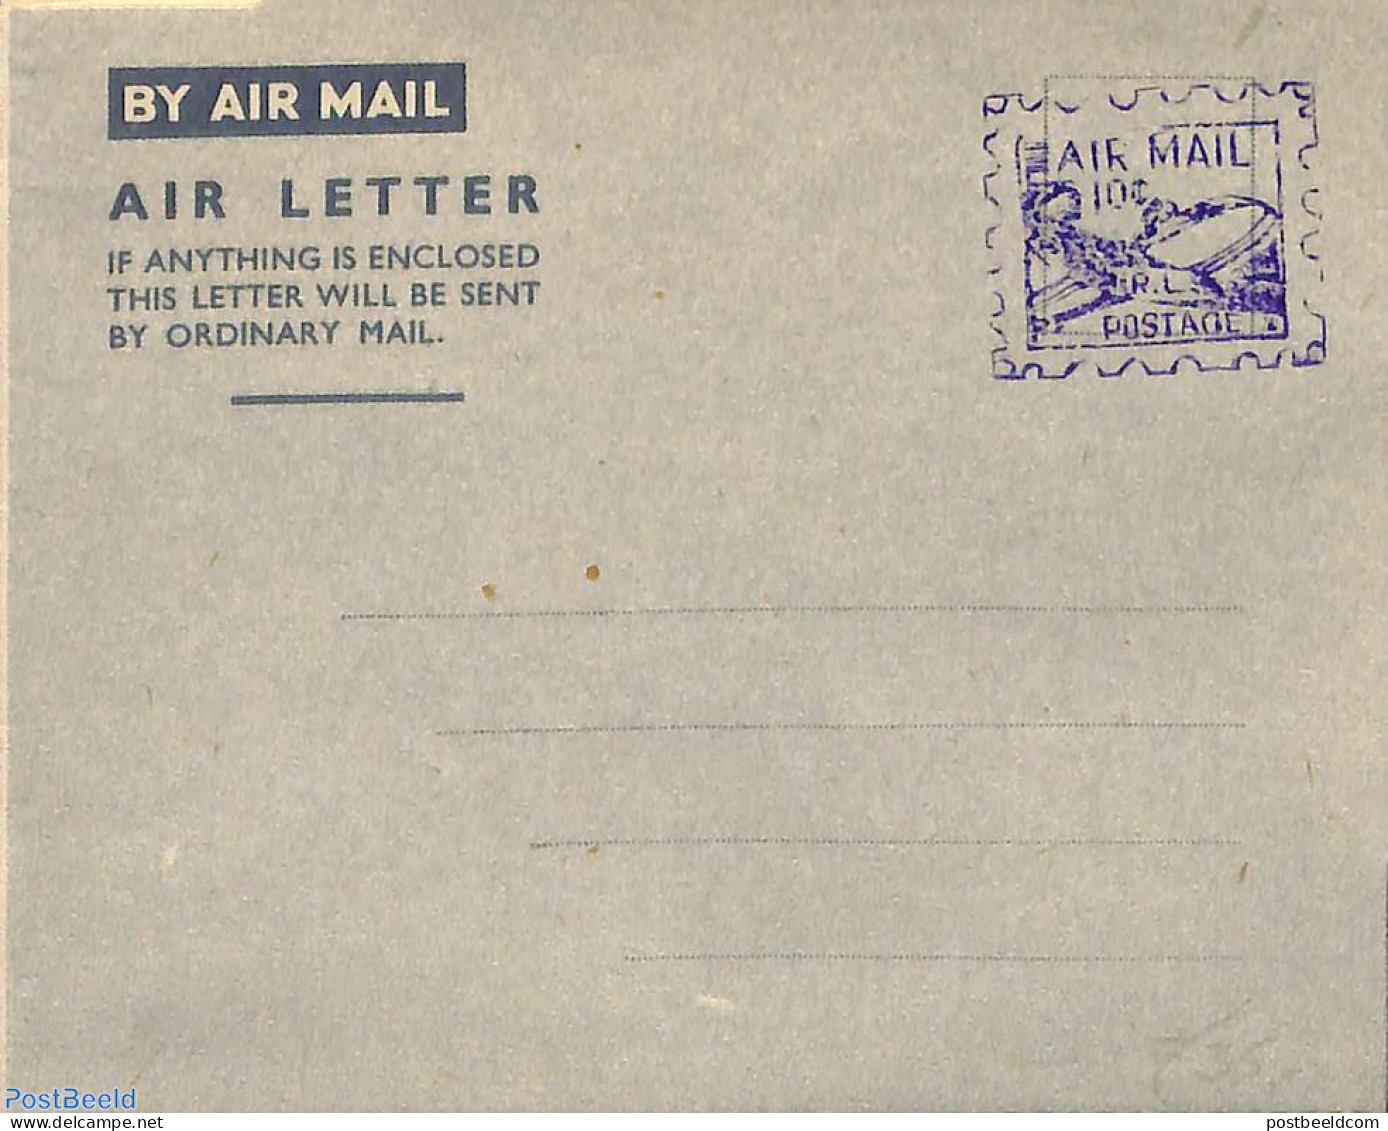 Liberia 1948 Aerogramme 10c, Unused Postal Stationary, Transport - Aircraft & Aviation - Aerei